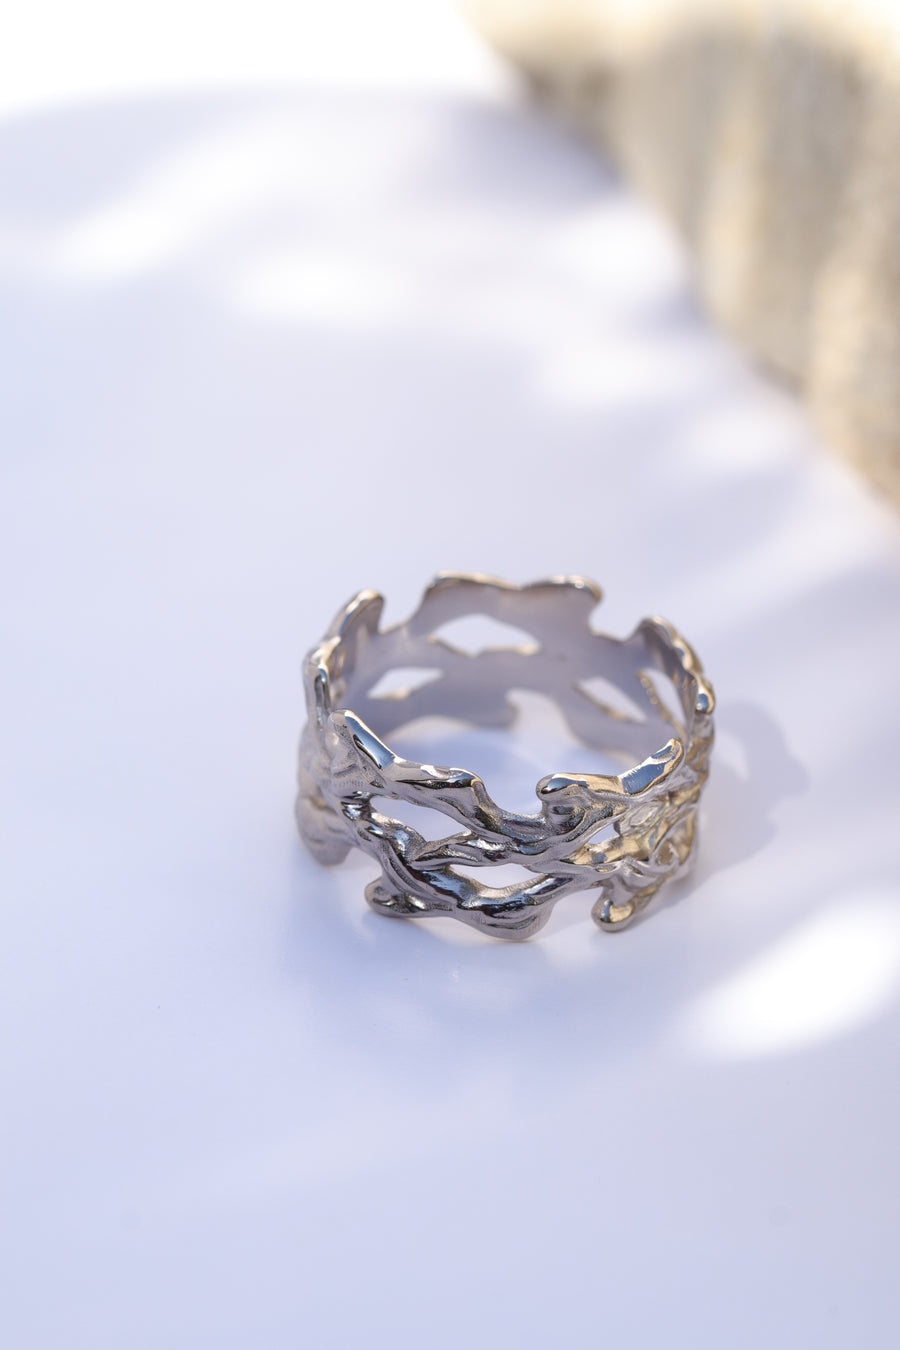 18K Gold Twig Ring - Woodland Ring